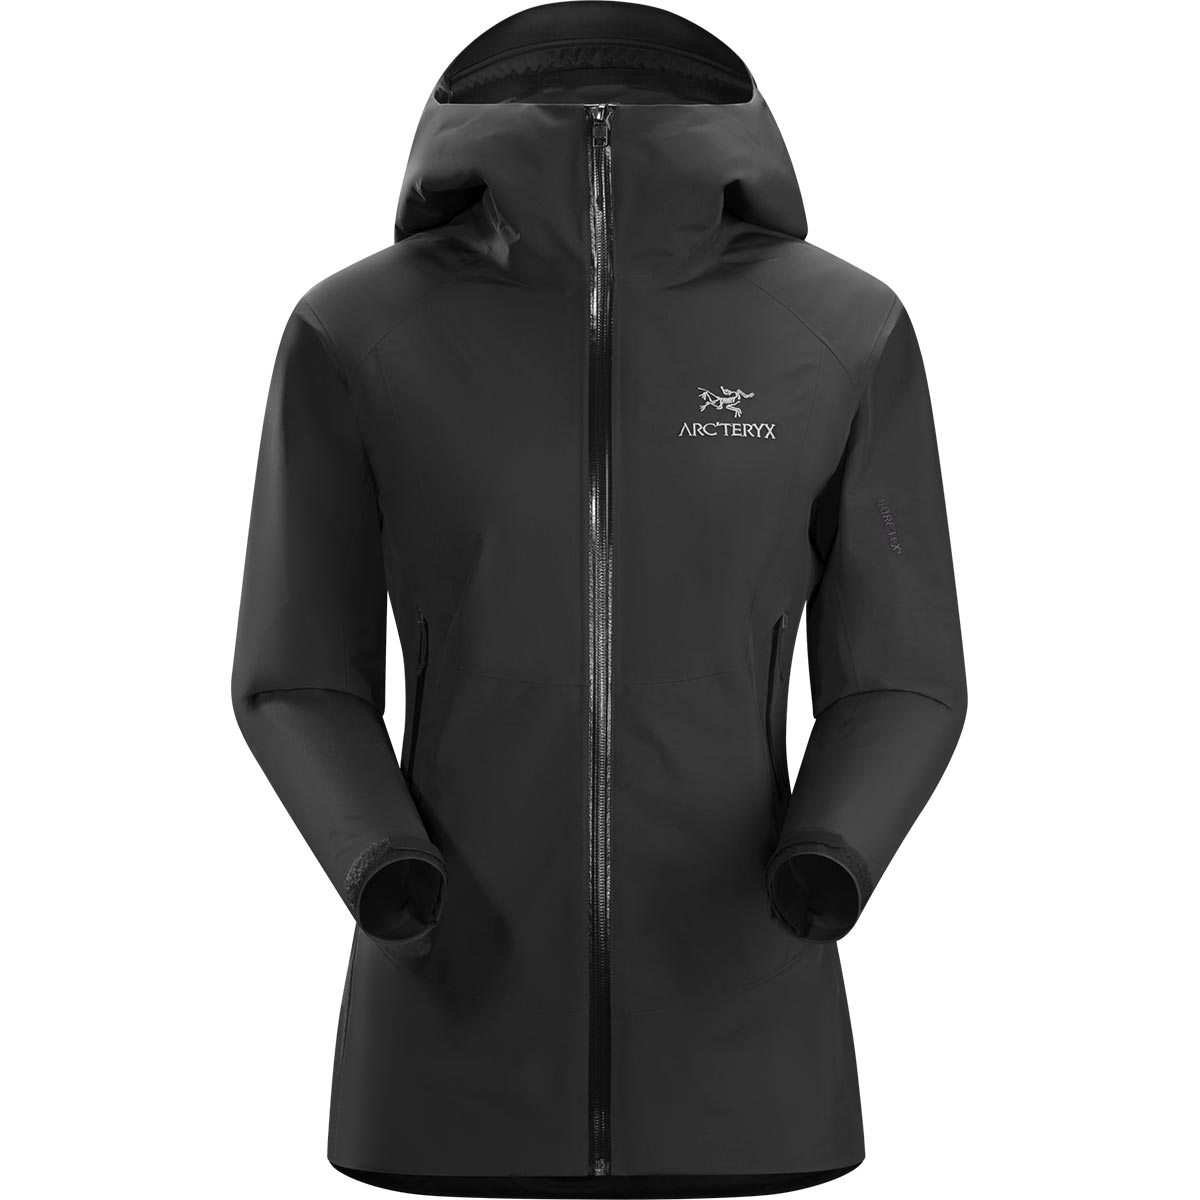 Beta SL Jacket, women's, discontinued Fall 2018 model